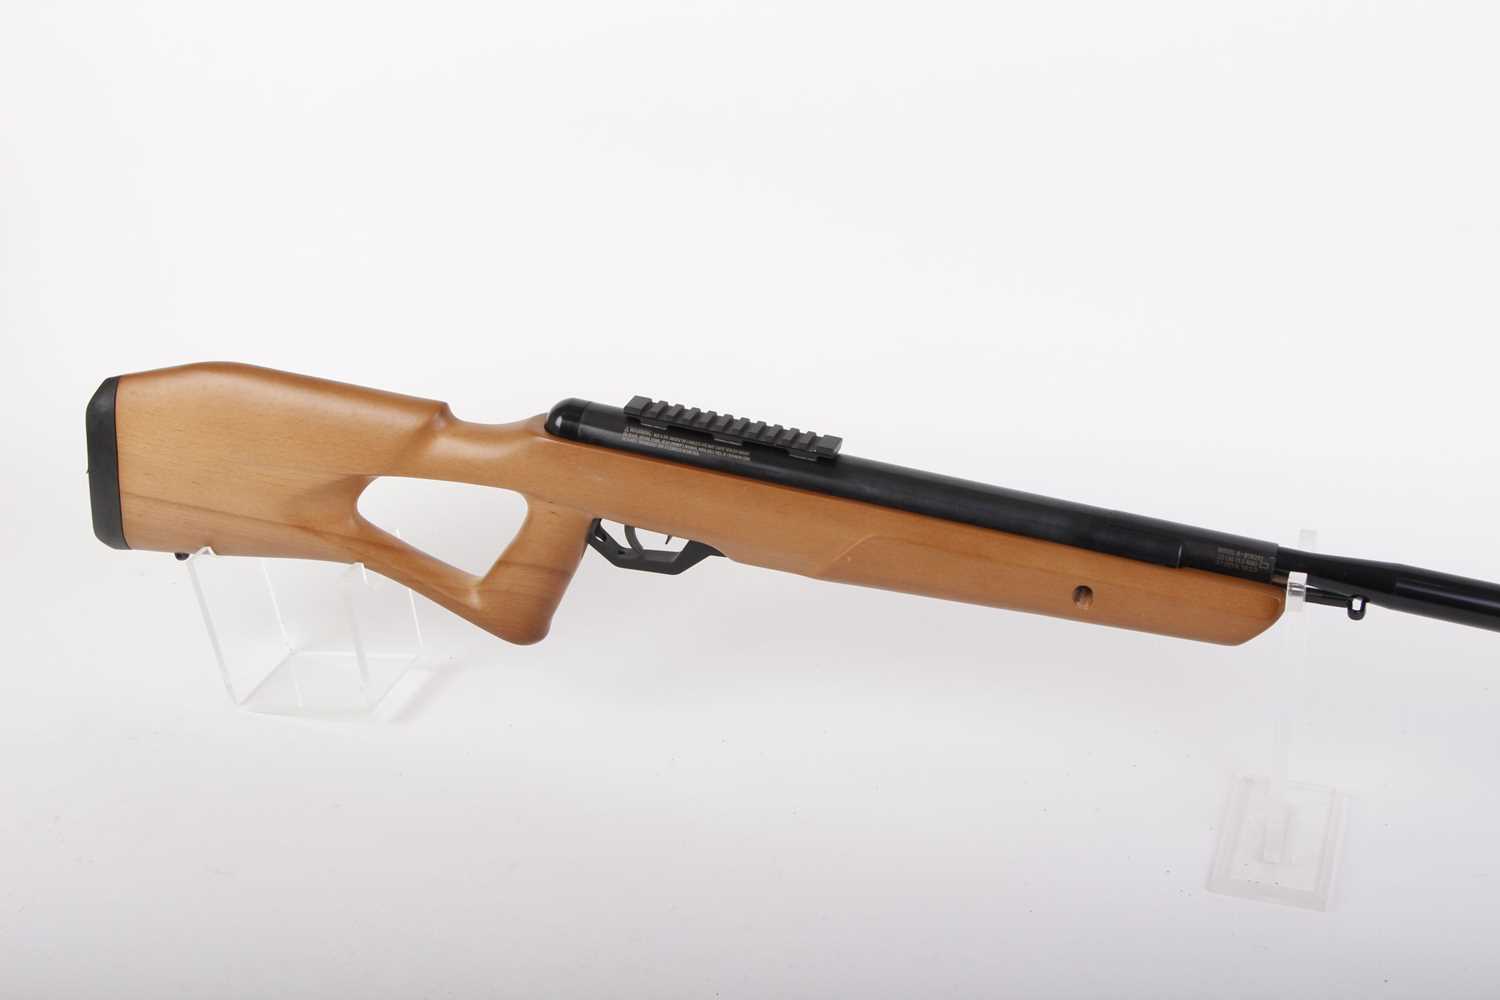 .22 Benjamin Trail break-barrel air rifle, tube mounted weaver scope rail, pistol grip stock with - Image 5 of 7